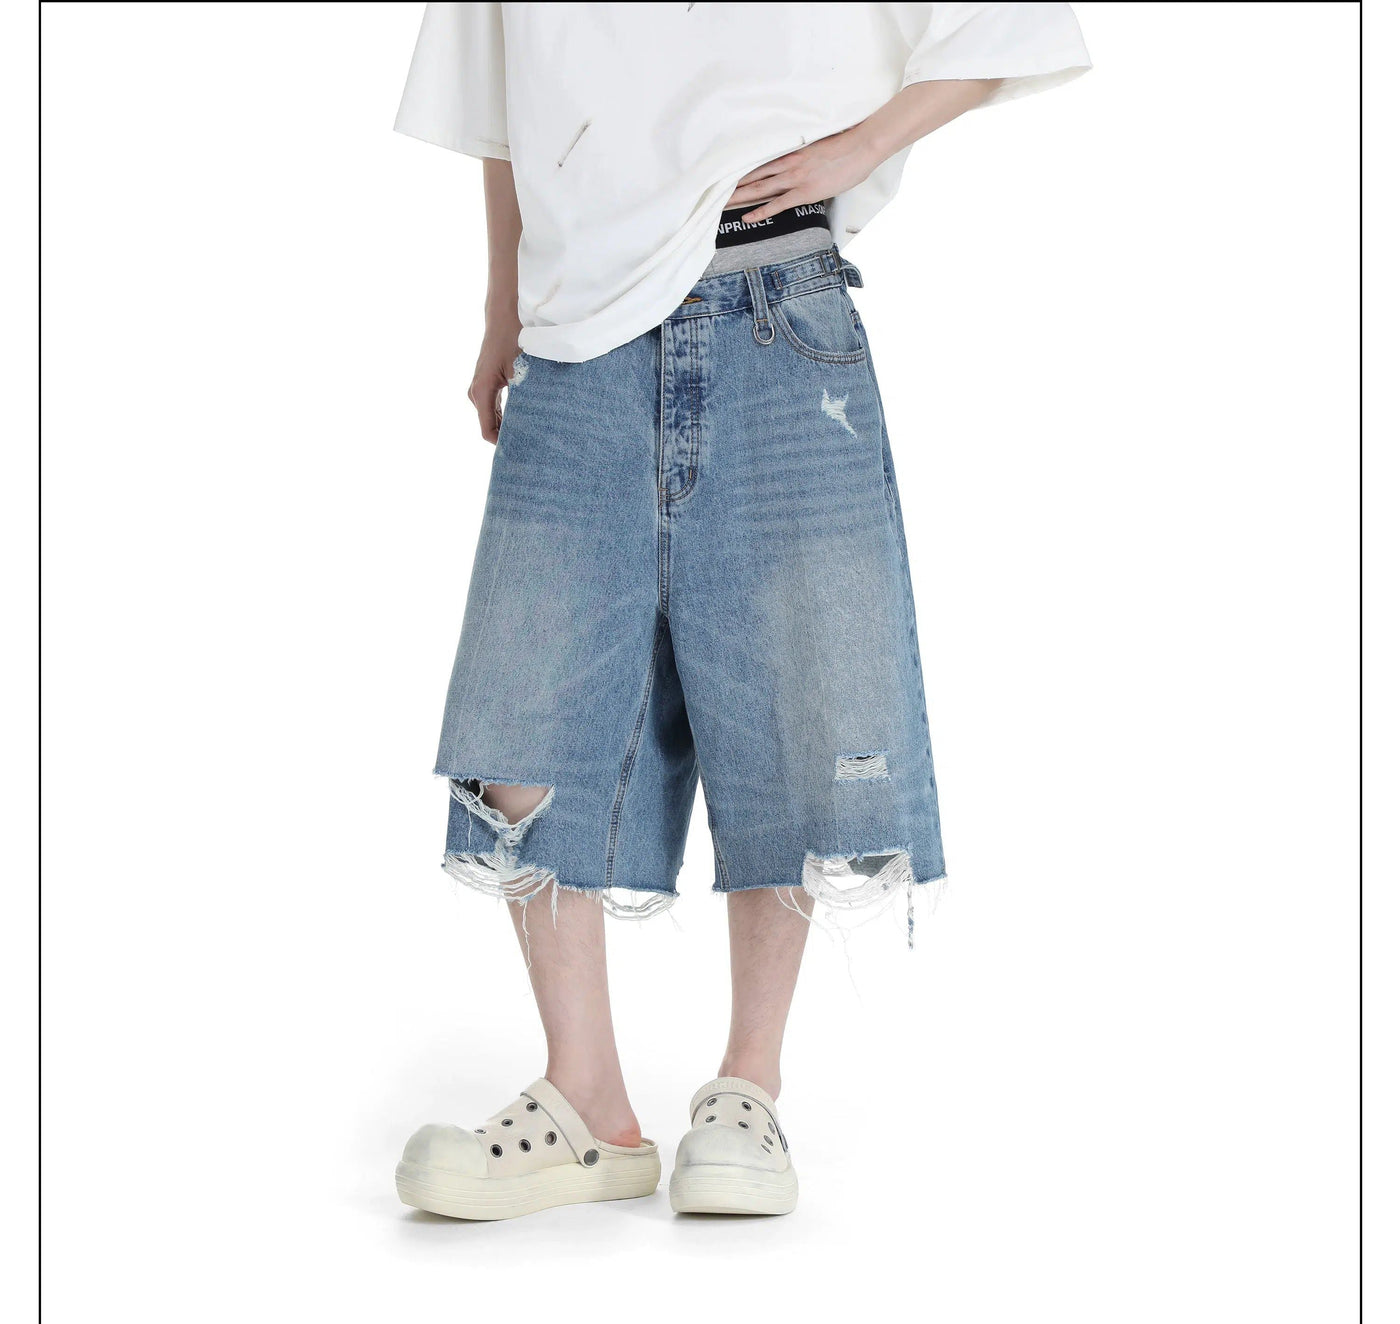 Scattered Distress Denim Shorts Korean Street Fashion Shorts By Mason Prince Shop Online at OH Vault